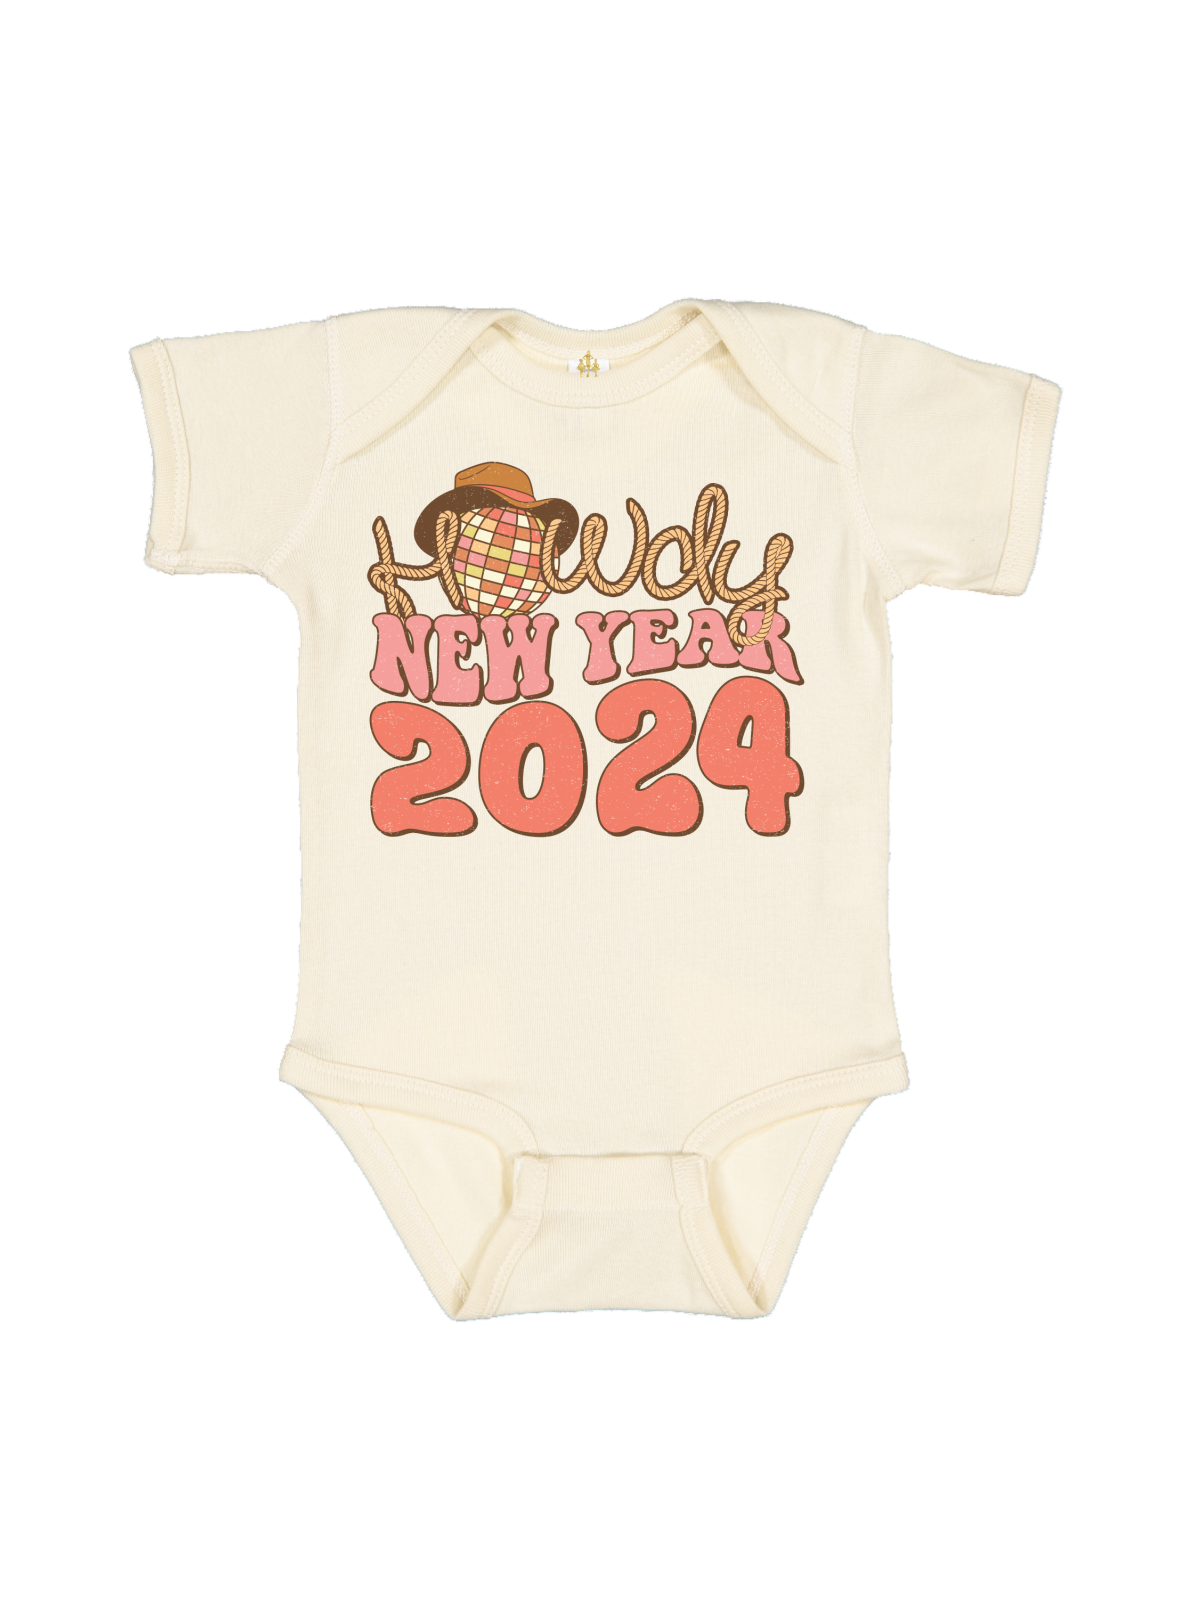 Howdy New Year 2024 Baby Romper